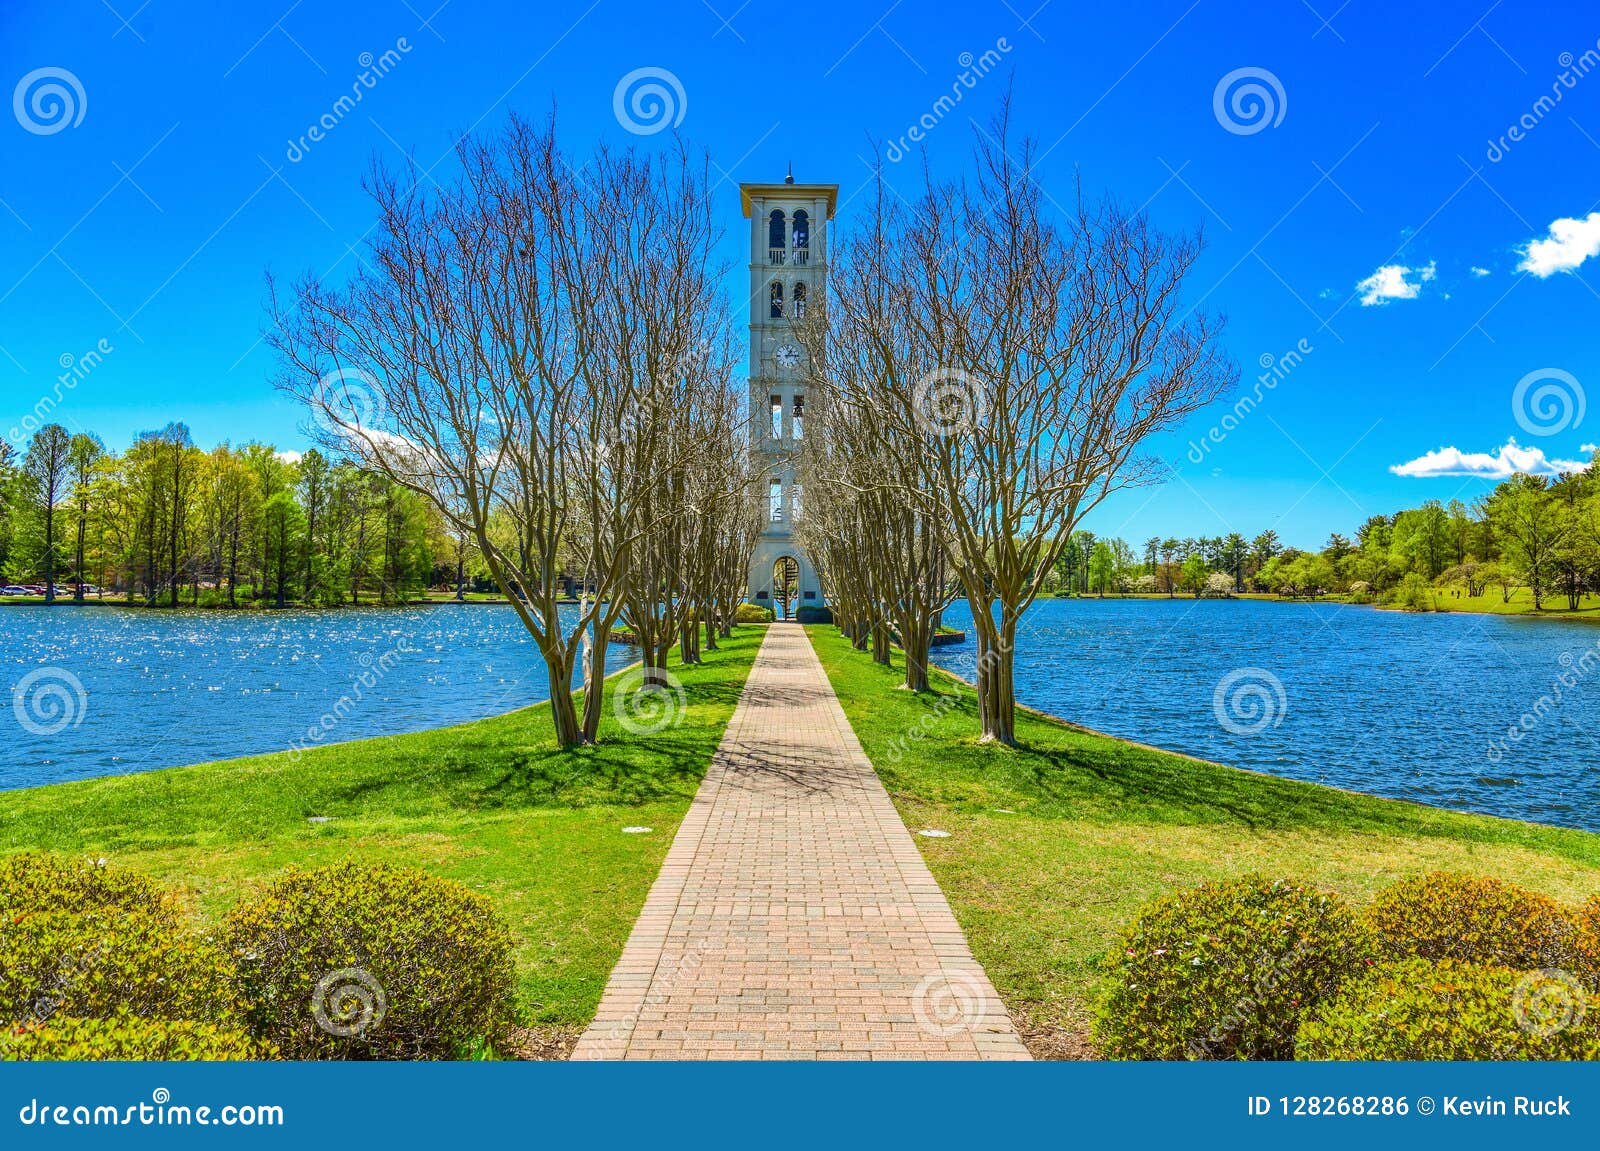 furman swan lake and bell tower in greenville, south carolina